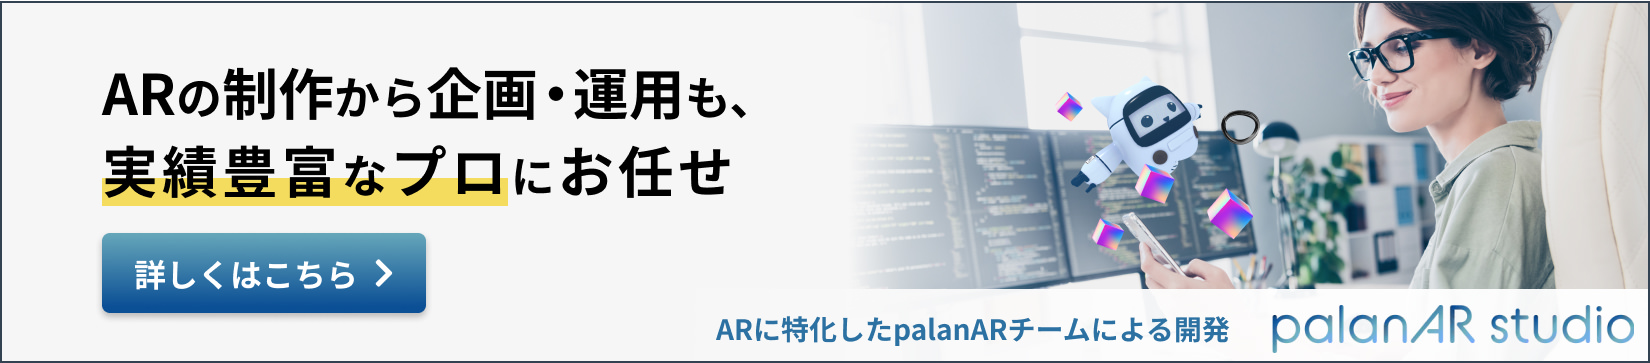 「ARの制作から企画・運用も、実績豊富なプロにお任せ」 ARに特化したpalanARチームによる開発 palanAR studio